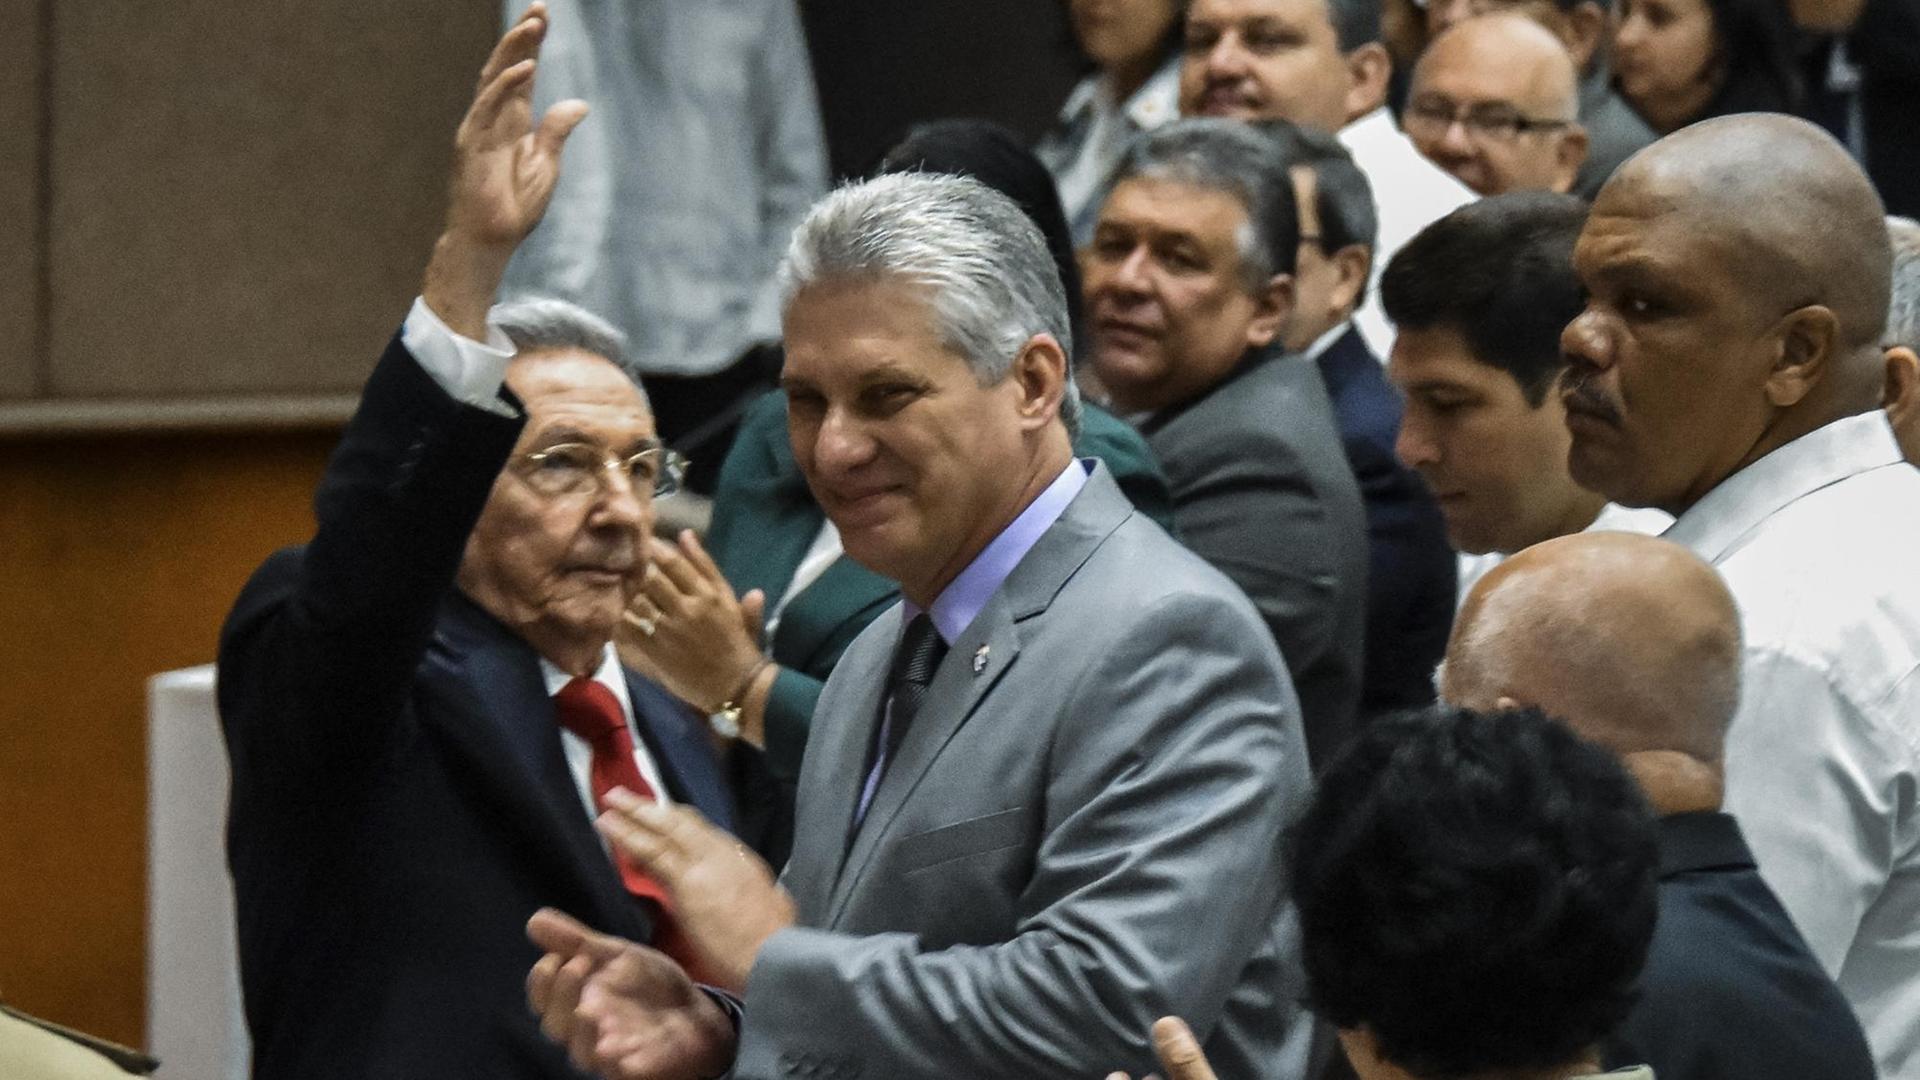 Der kubanische Präsident winkt neben Miguel Diaz-Canel, dem ersten Vize-Präsidenten